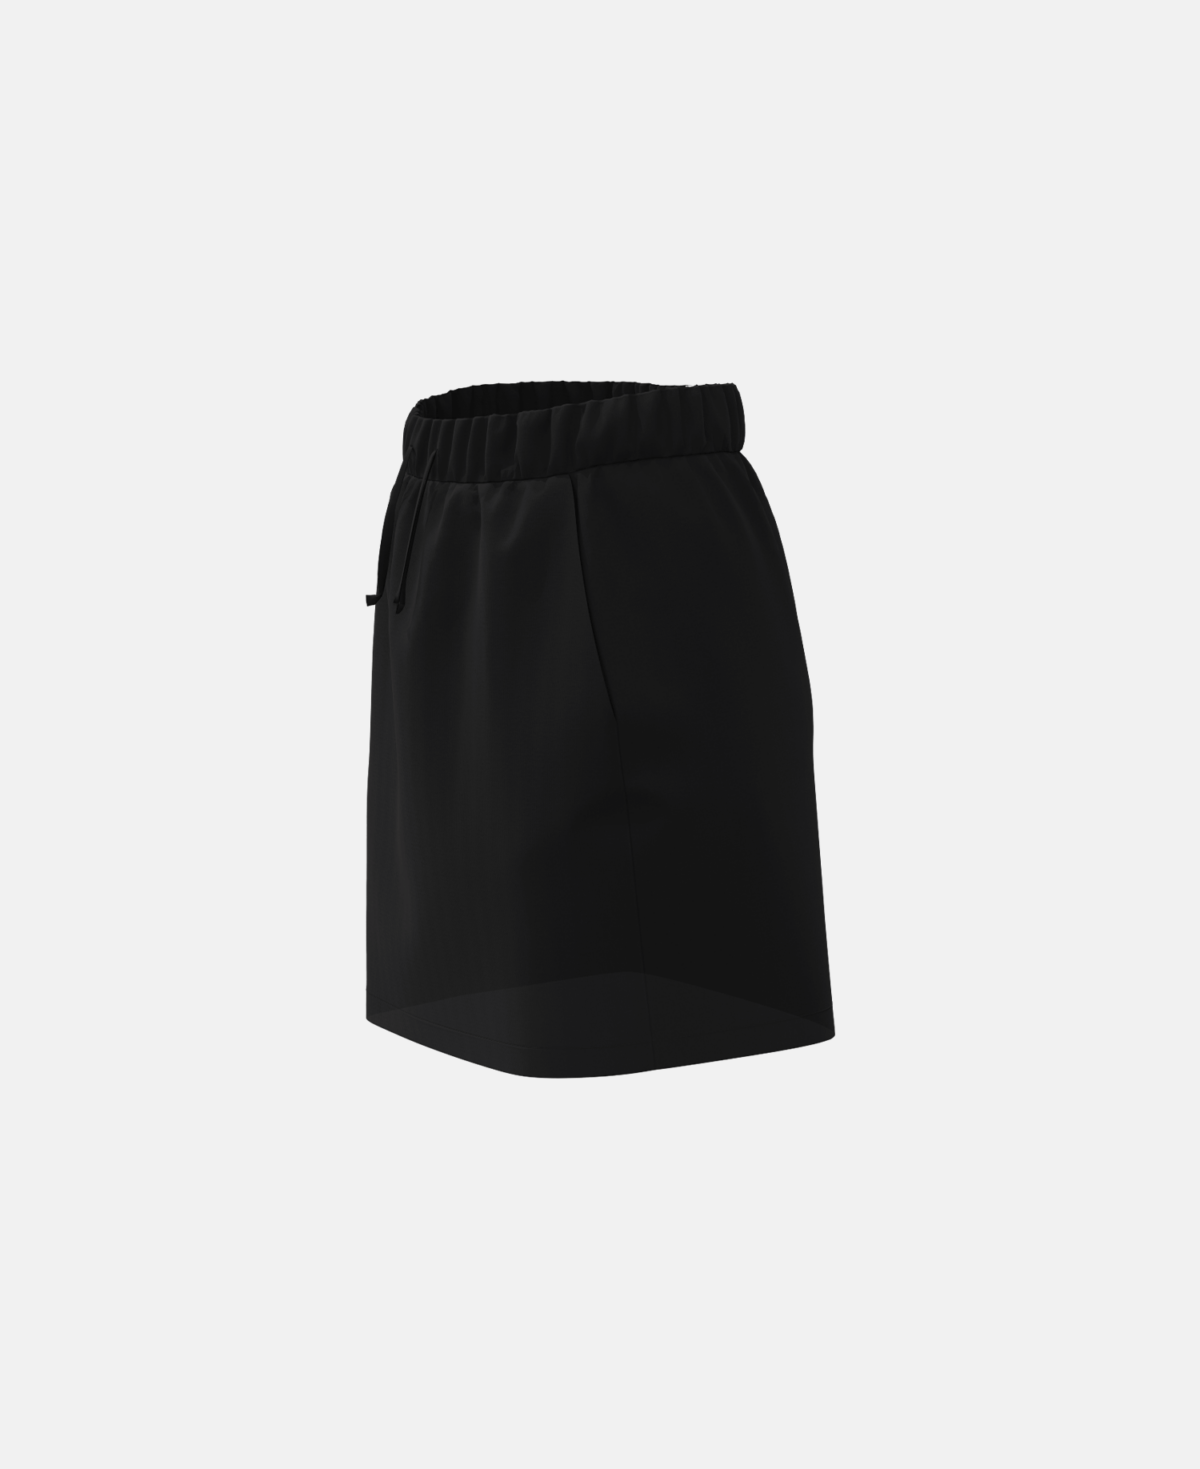 Marseille Women's Skirt